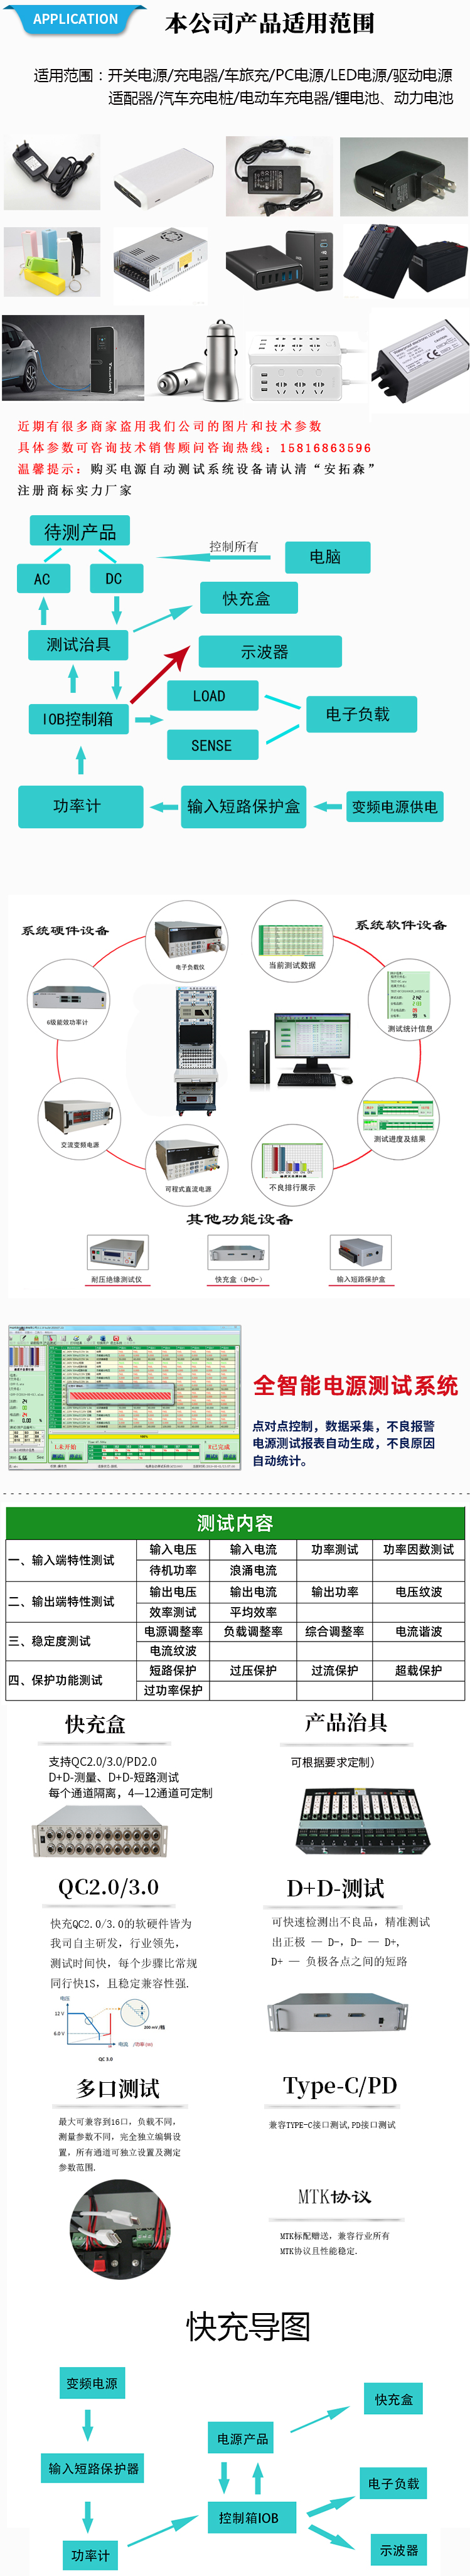 PC電源測試系統